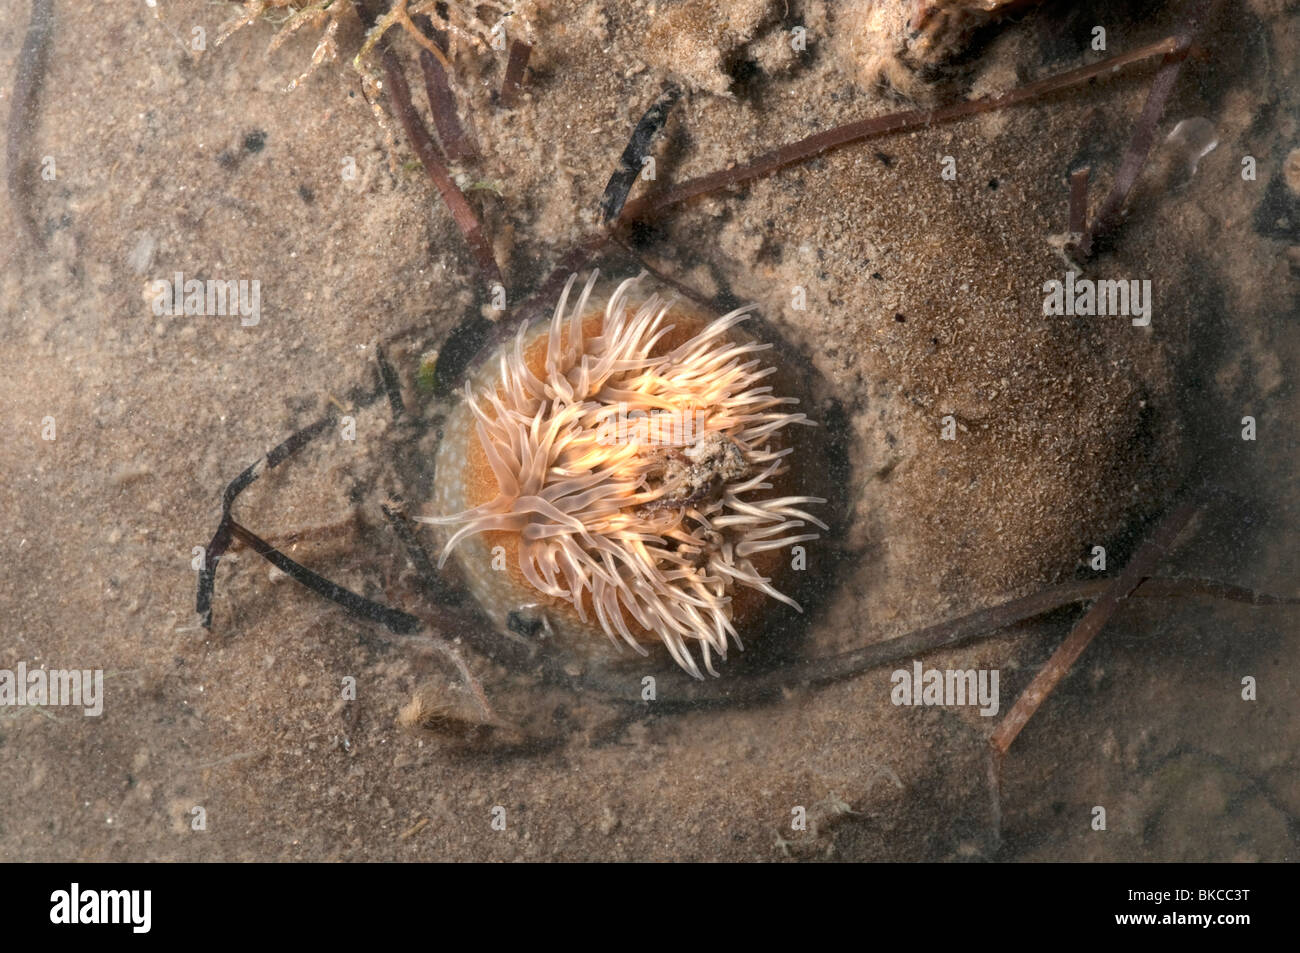 Anemone marittimo ed elegante (Anemone Sagartia elegans) sulla sabbia. Foto Stock